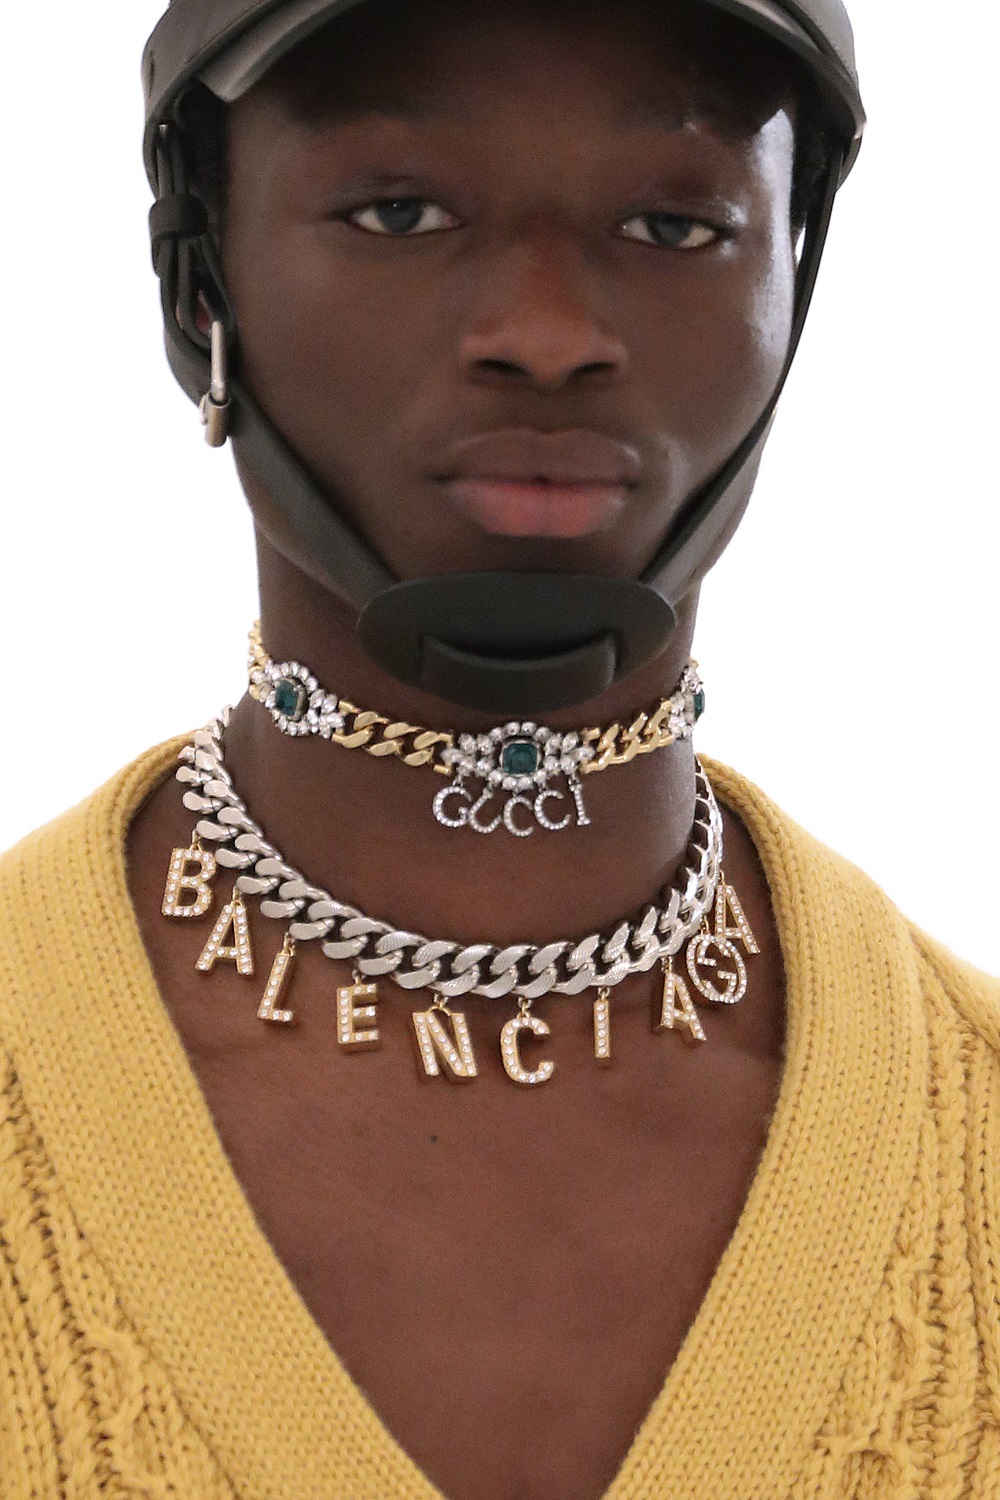 Incase You Missed It: 'Aria' by, Gucci x Balenciaga — BOND